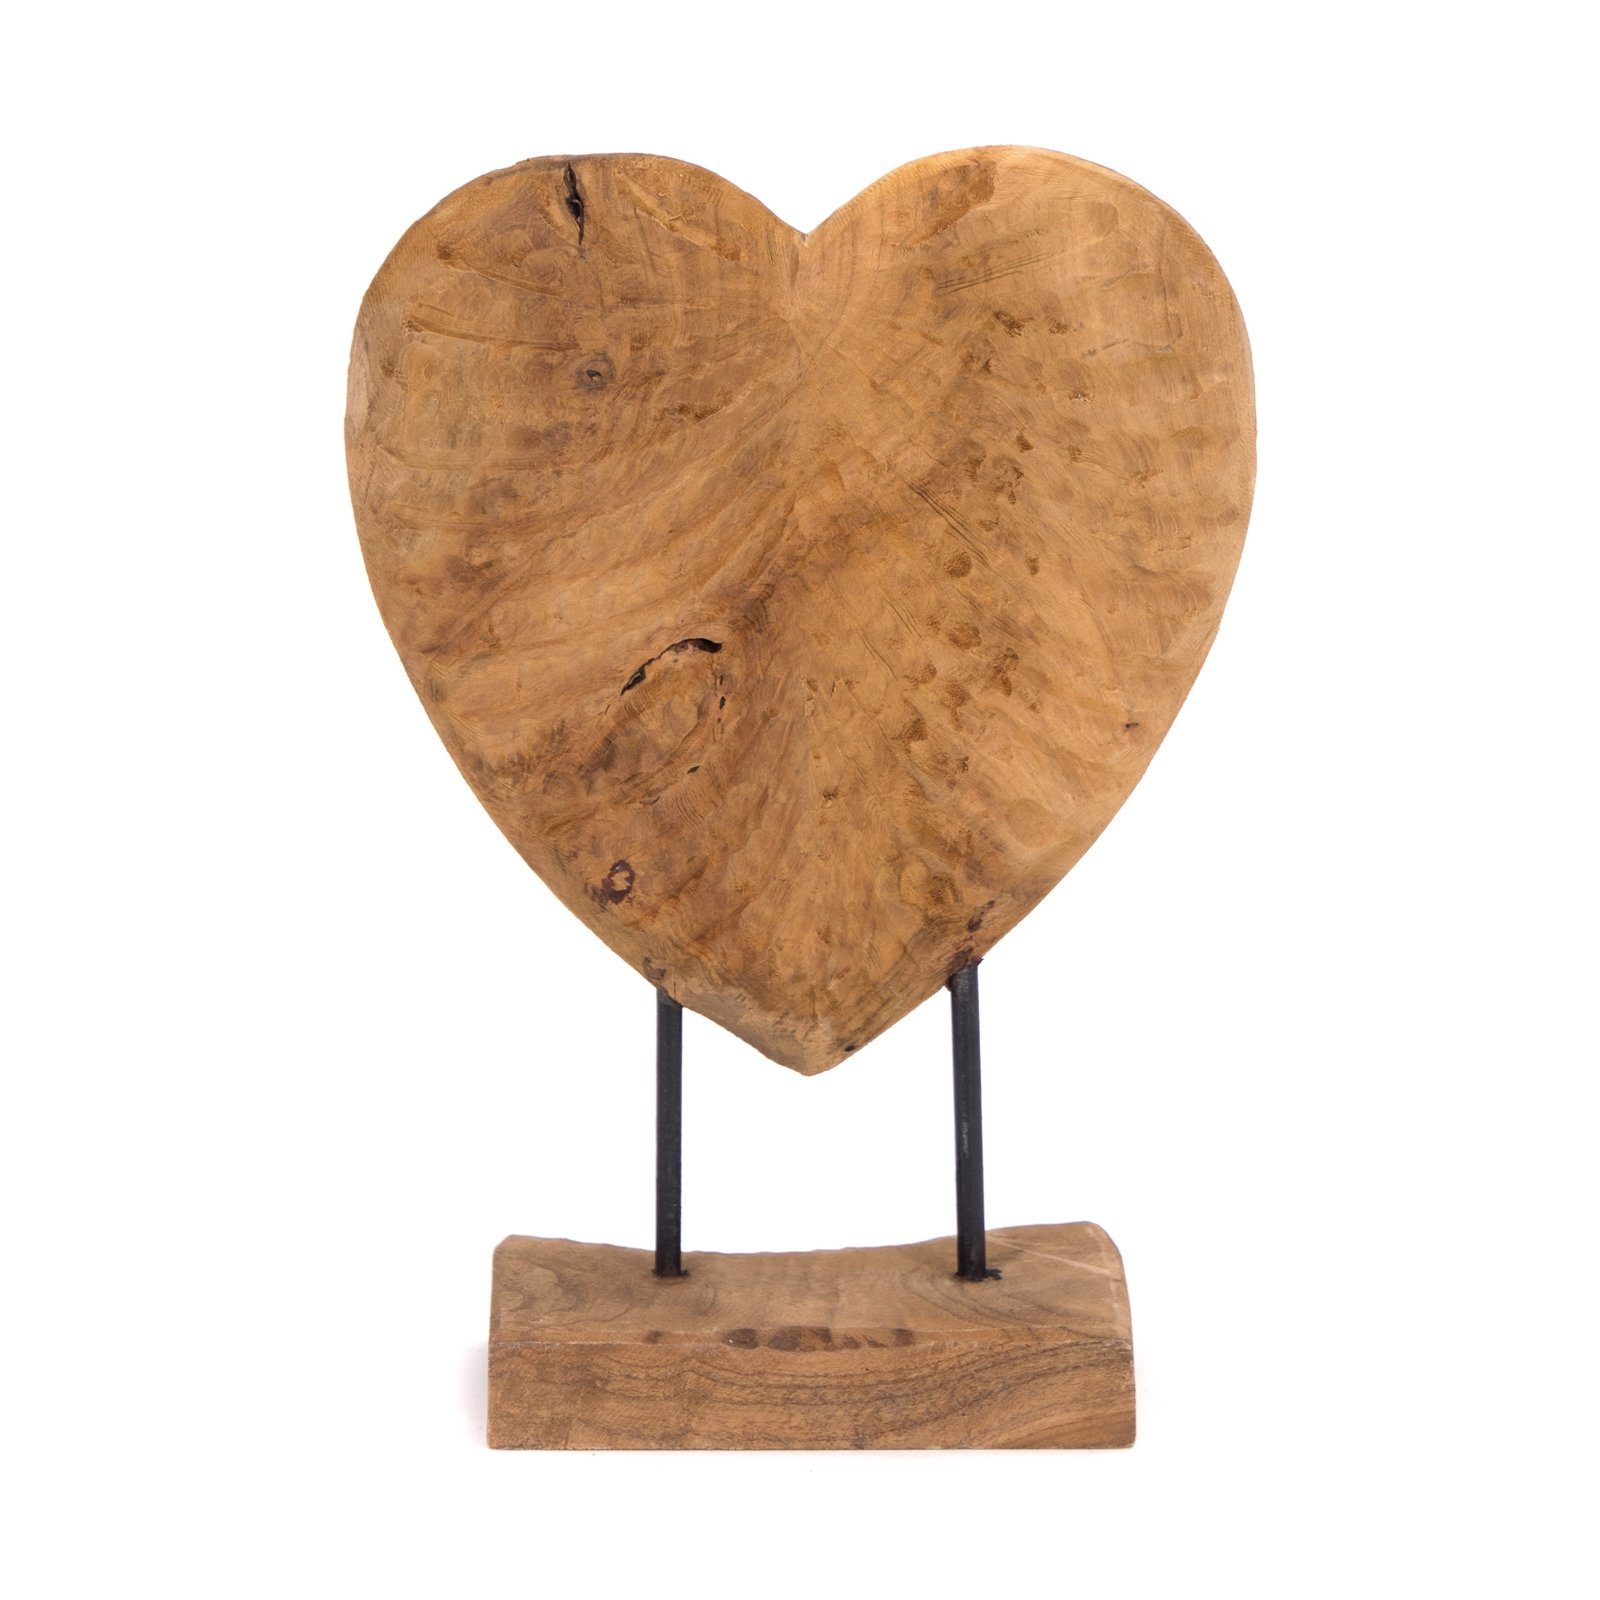 CREEDWOOD Skulptur "LOVE", 36 Deko cm, Holz, Skulptur, Herz FIGUR Aufsteller HERZ